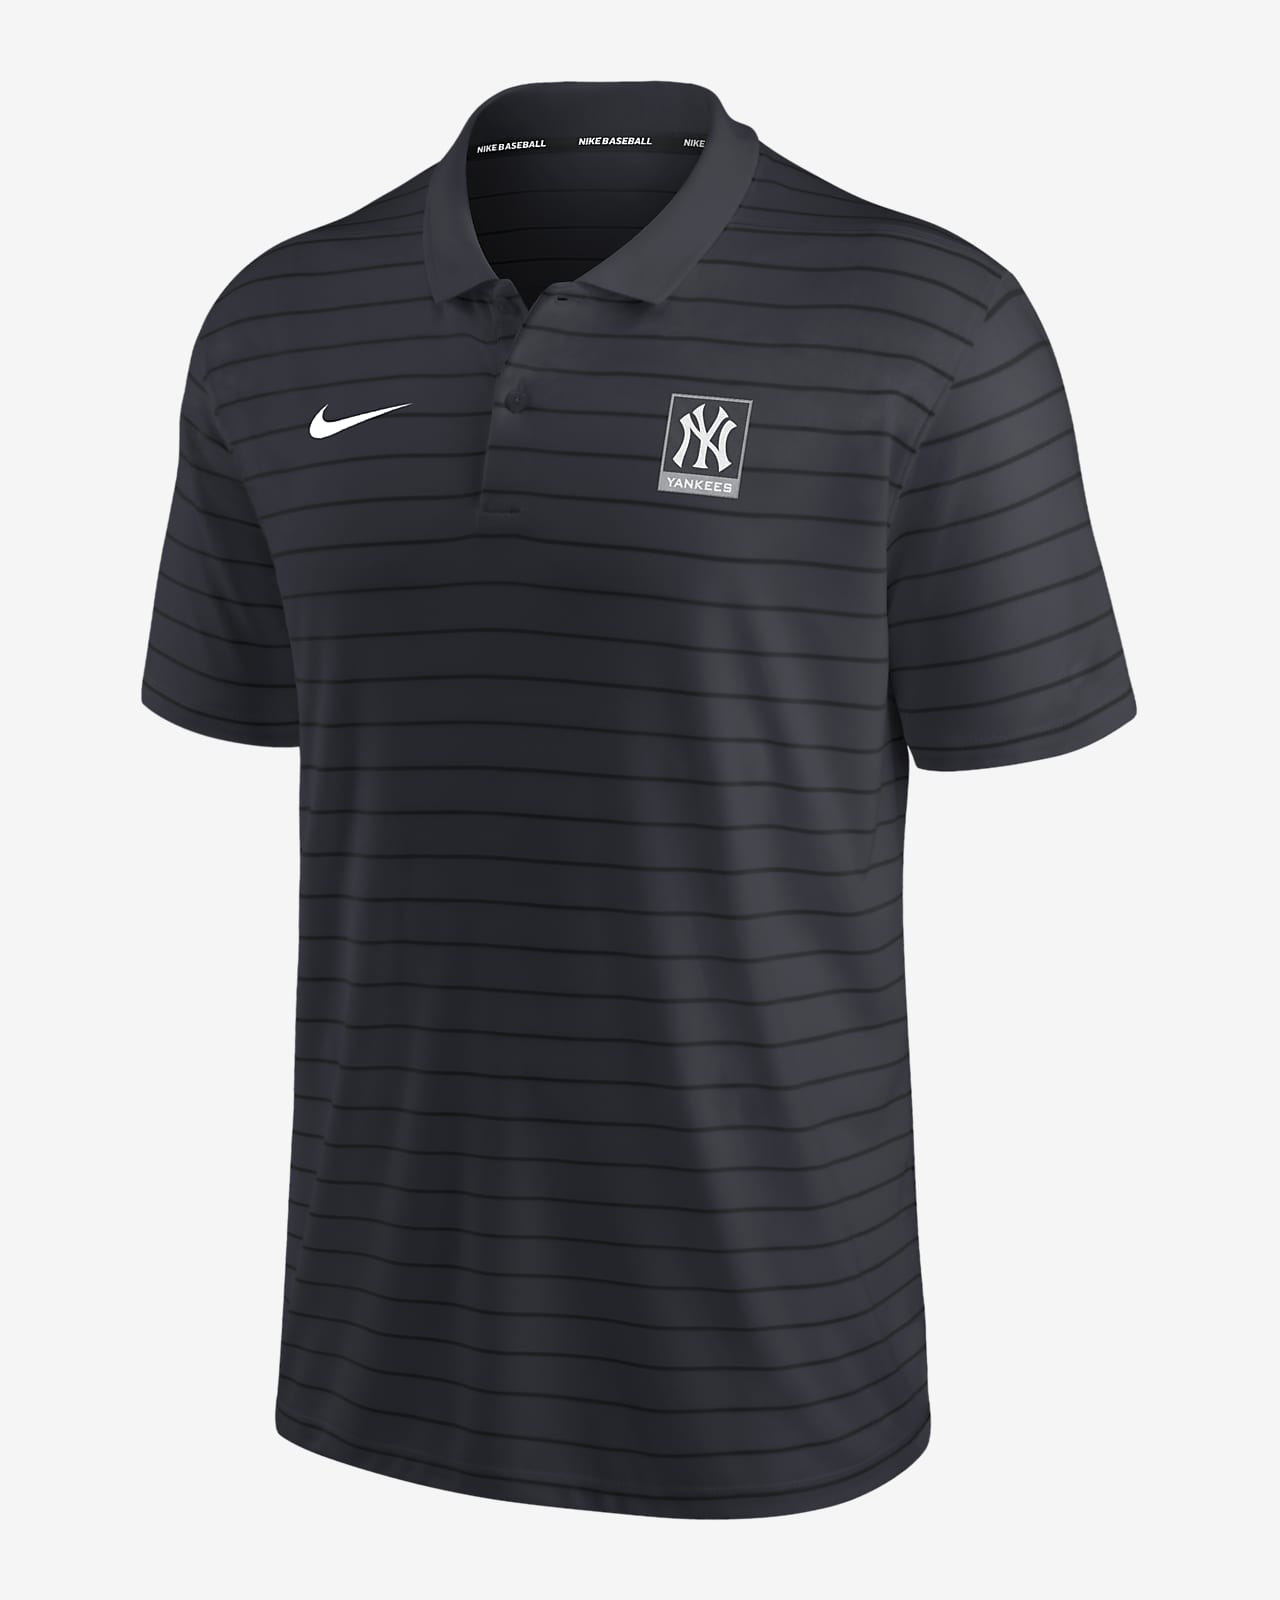 NIKE Mens DRI-FIT XL NY NEW YORK YANKEES Baseball Golf Athletic Polo Shirt